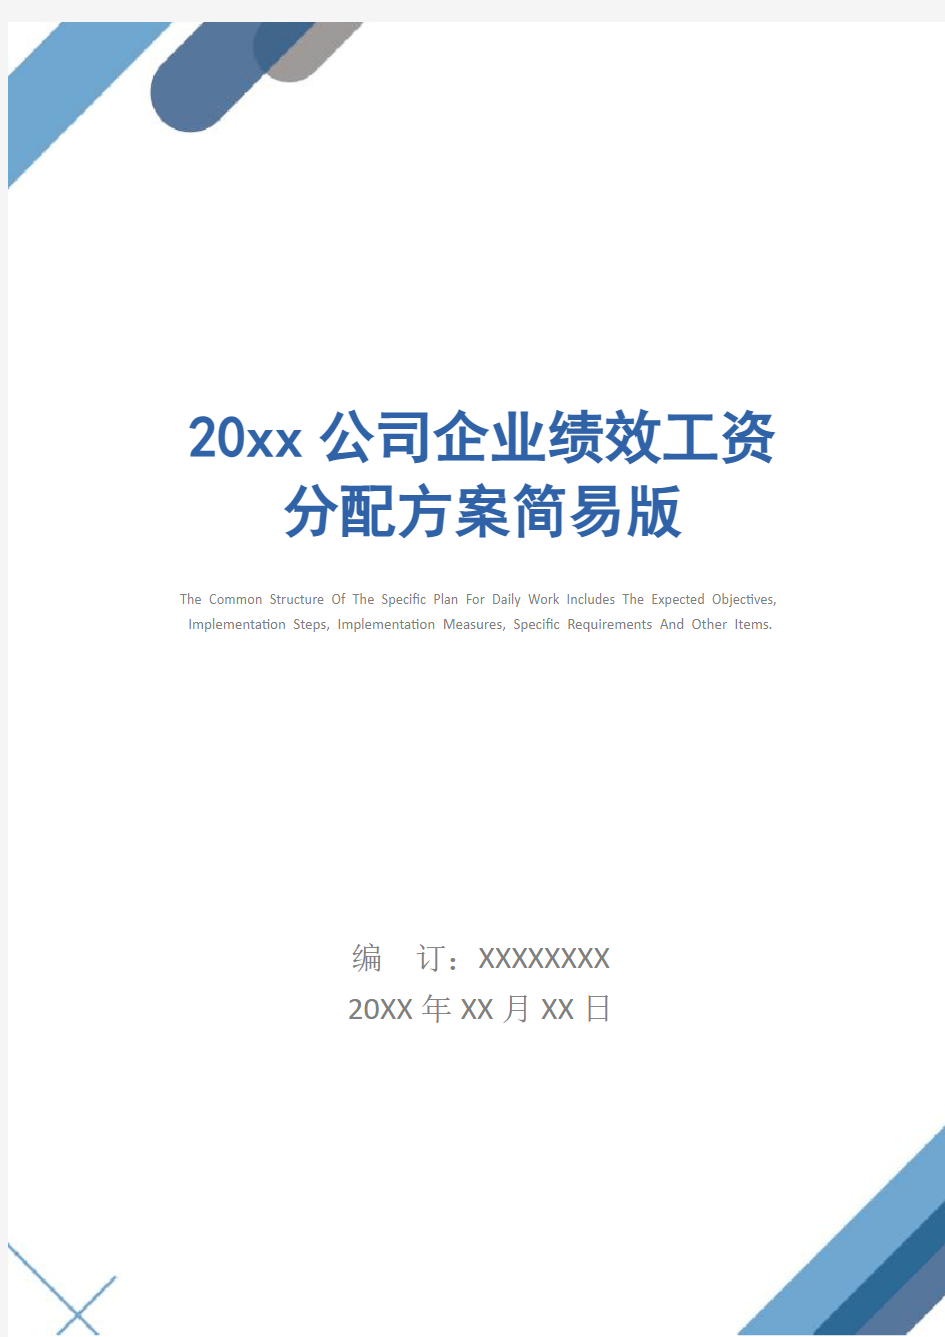 20xx公司企业绩效工资分配方案简易版